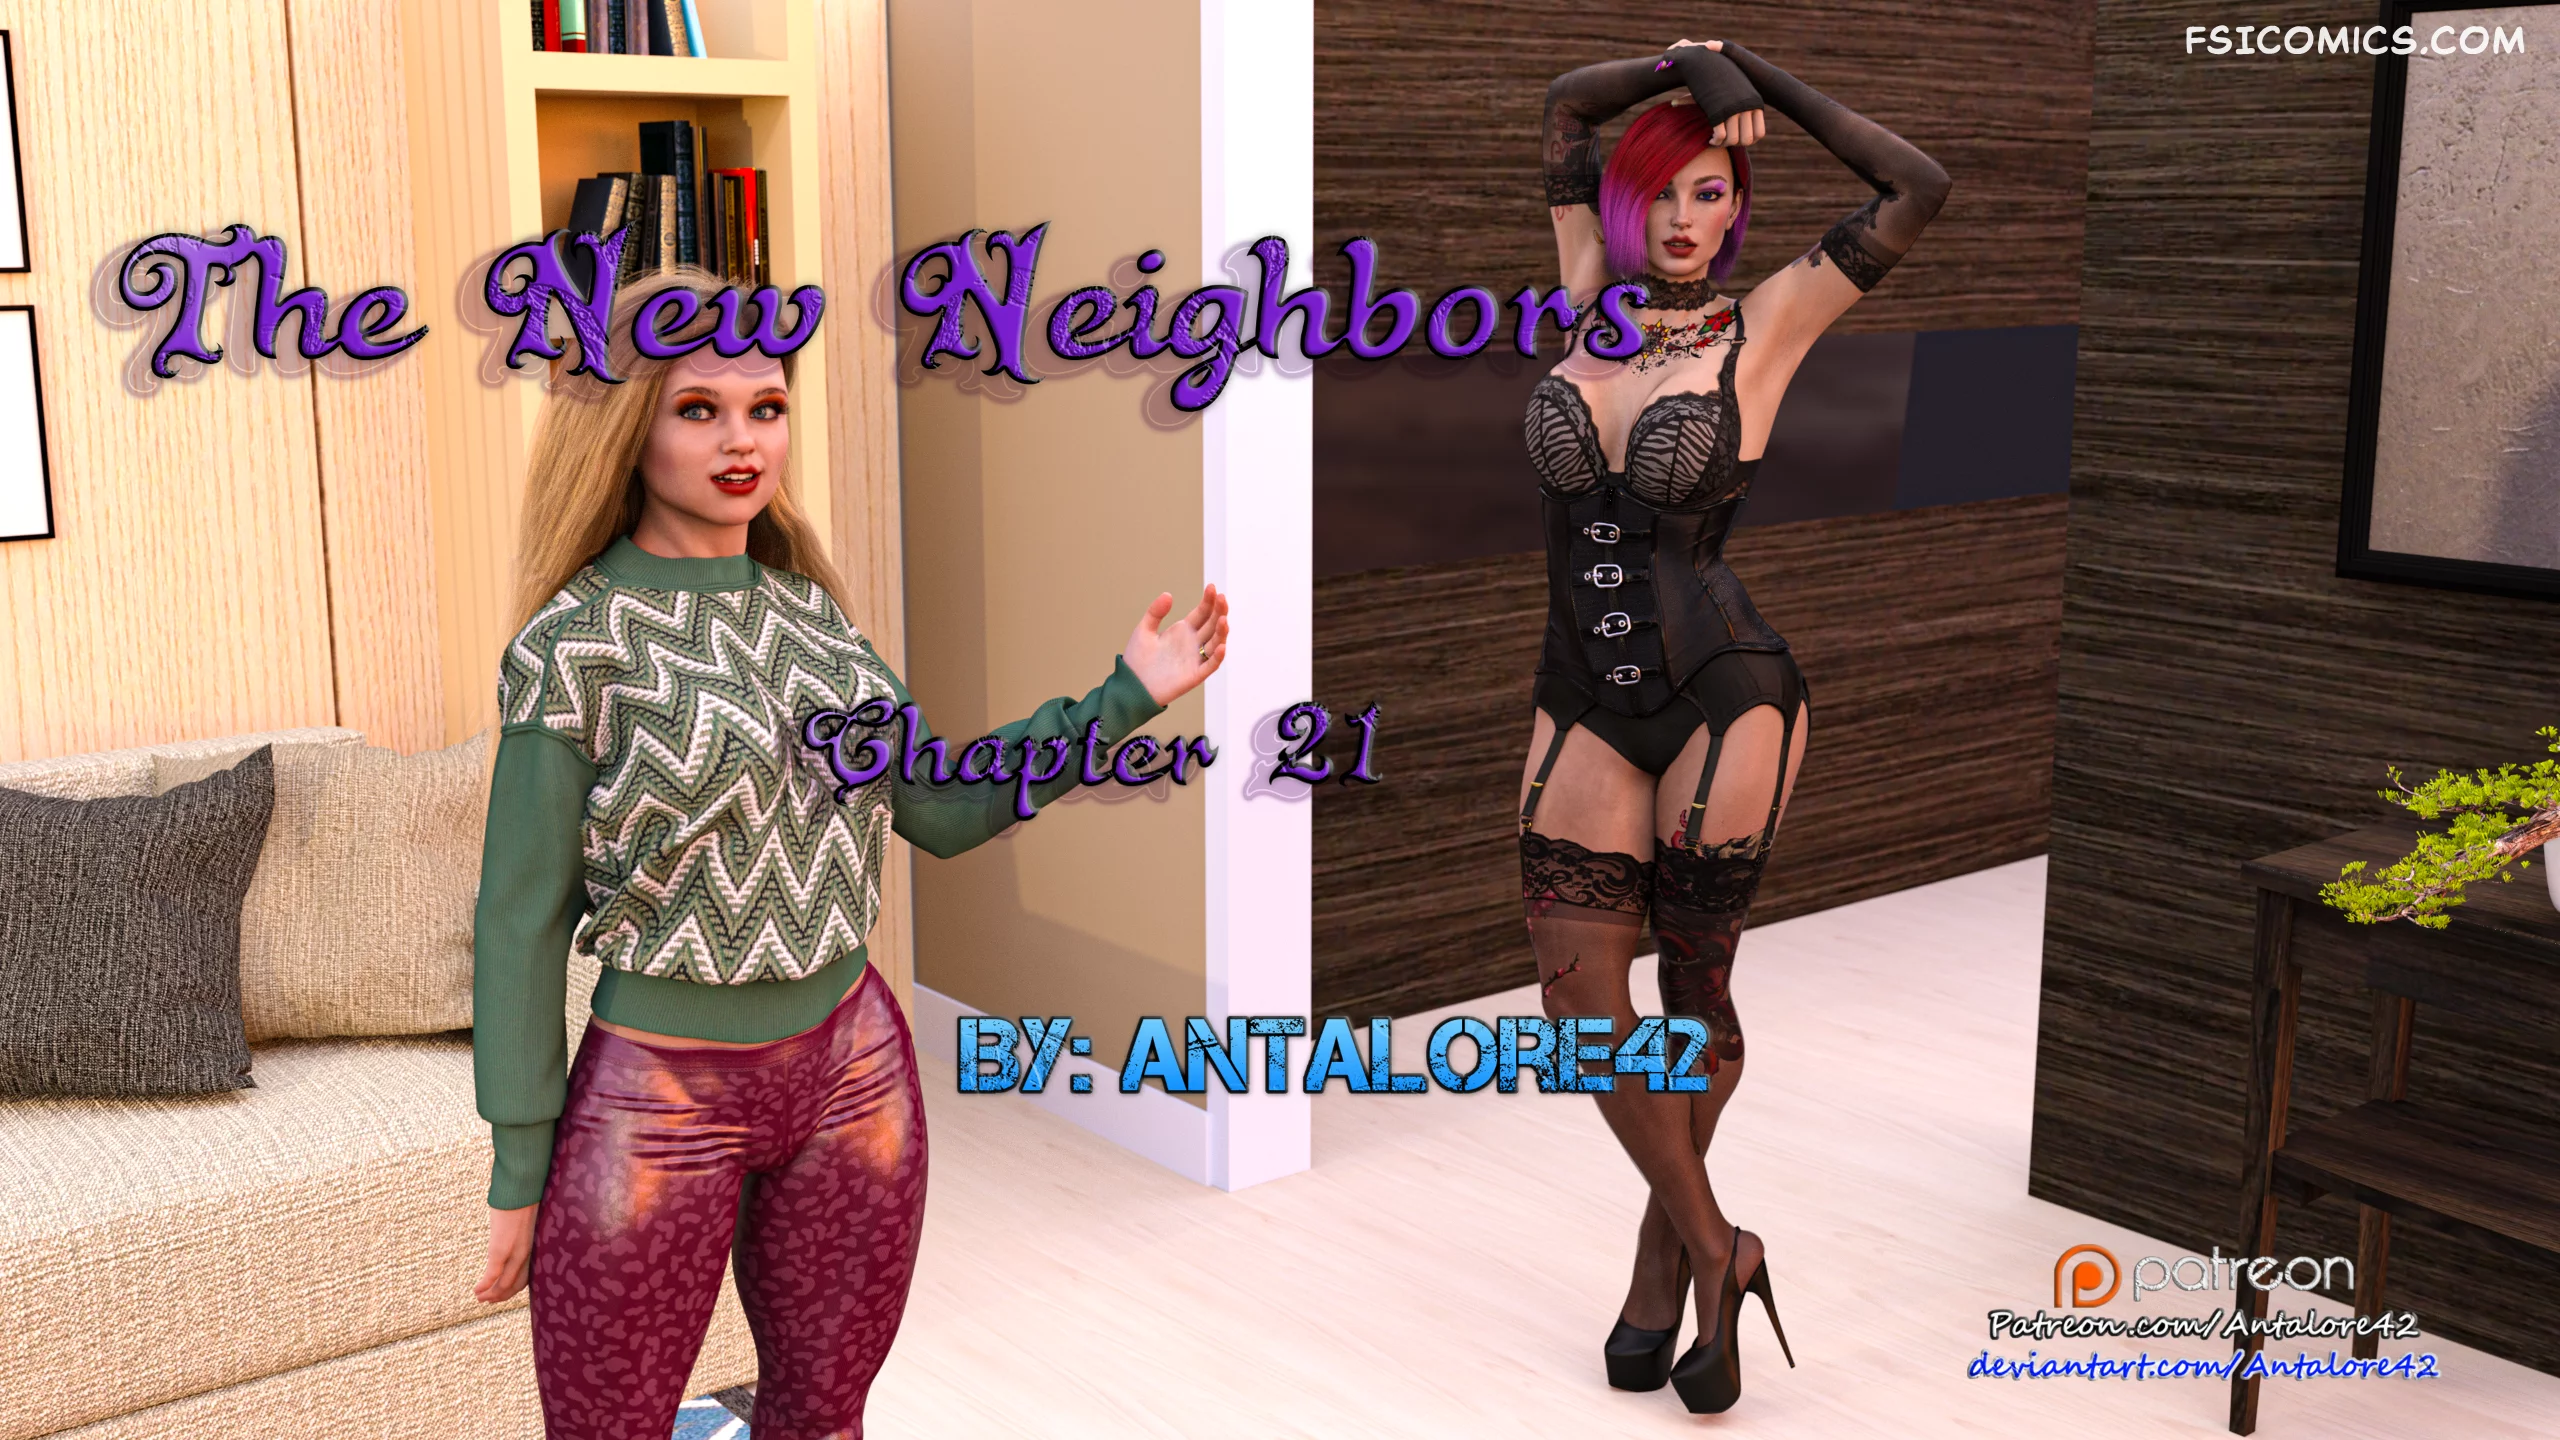 The New Neighbors Chapter 21 – Antalore42 - 27 - FSIComics